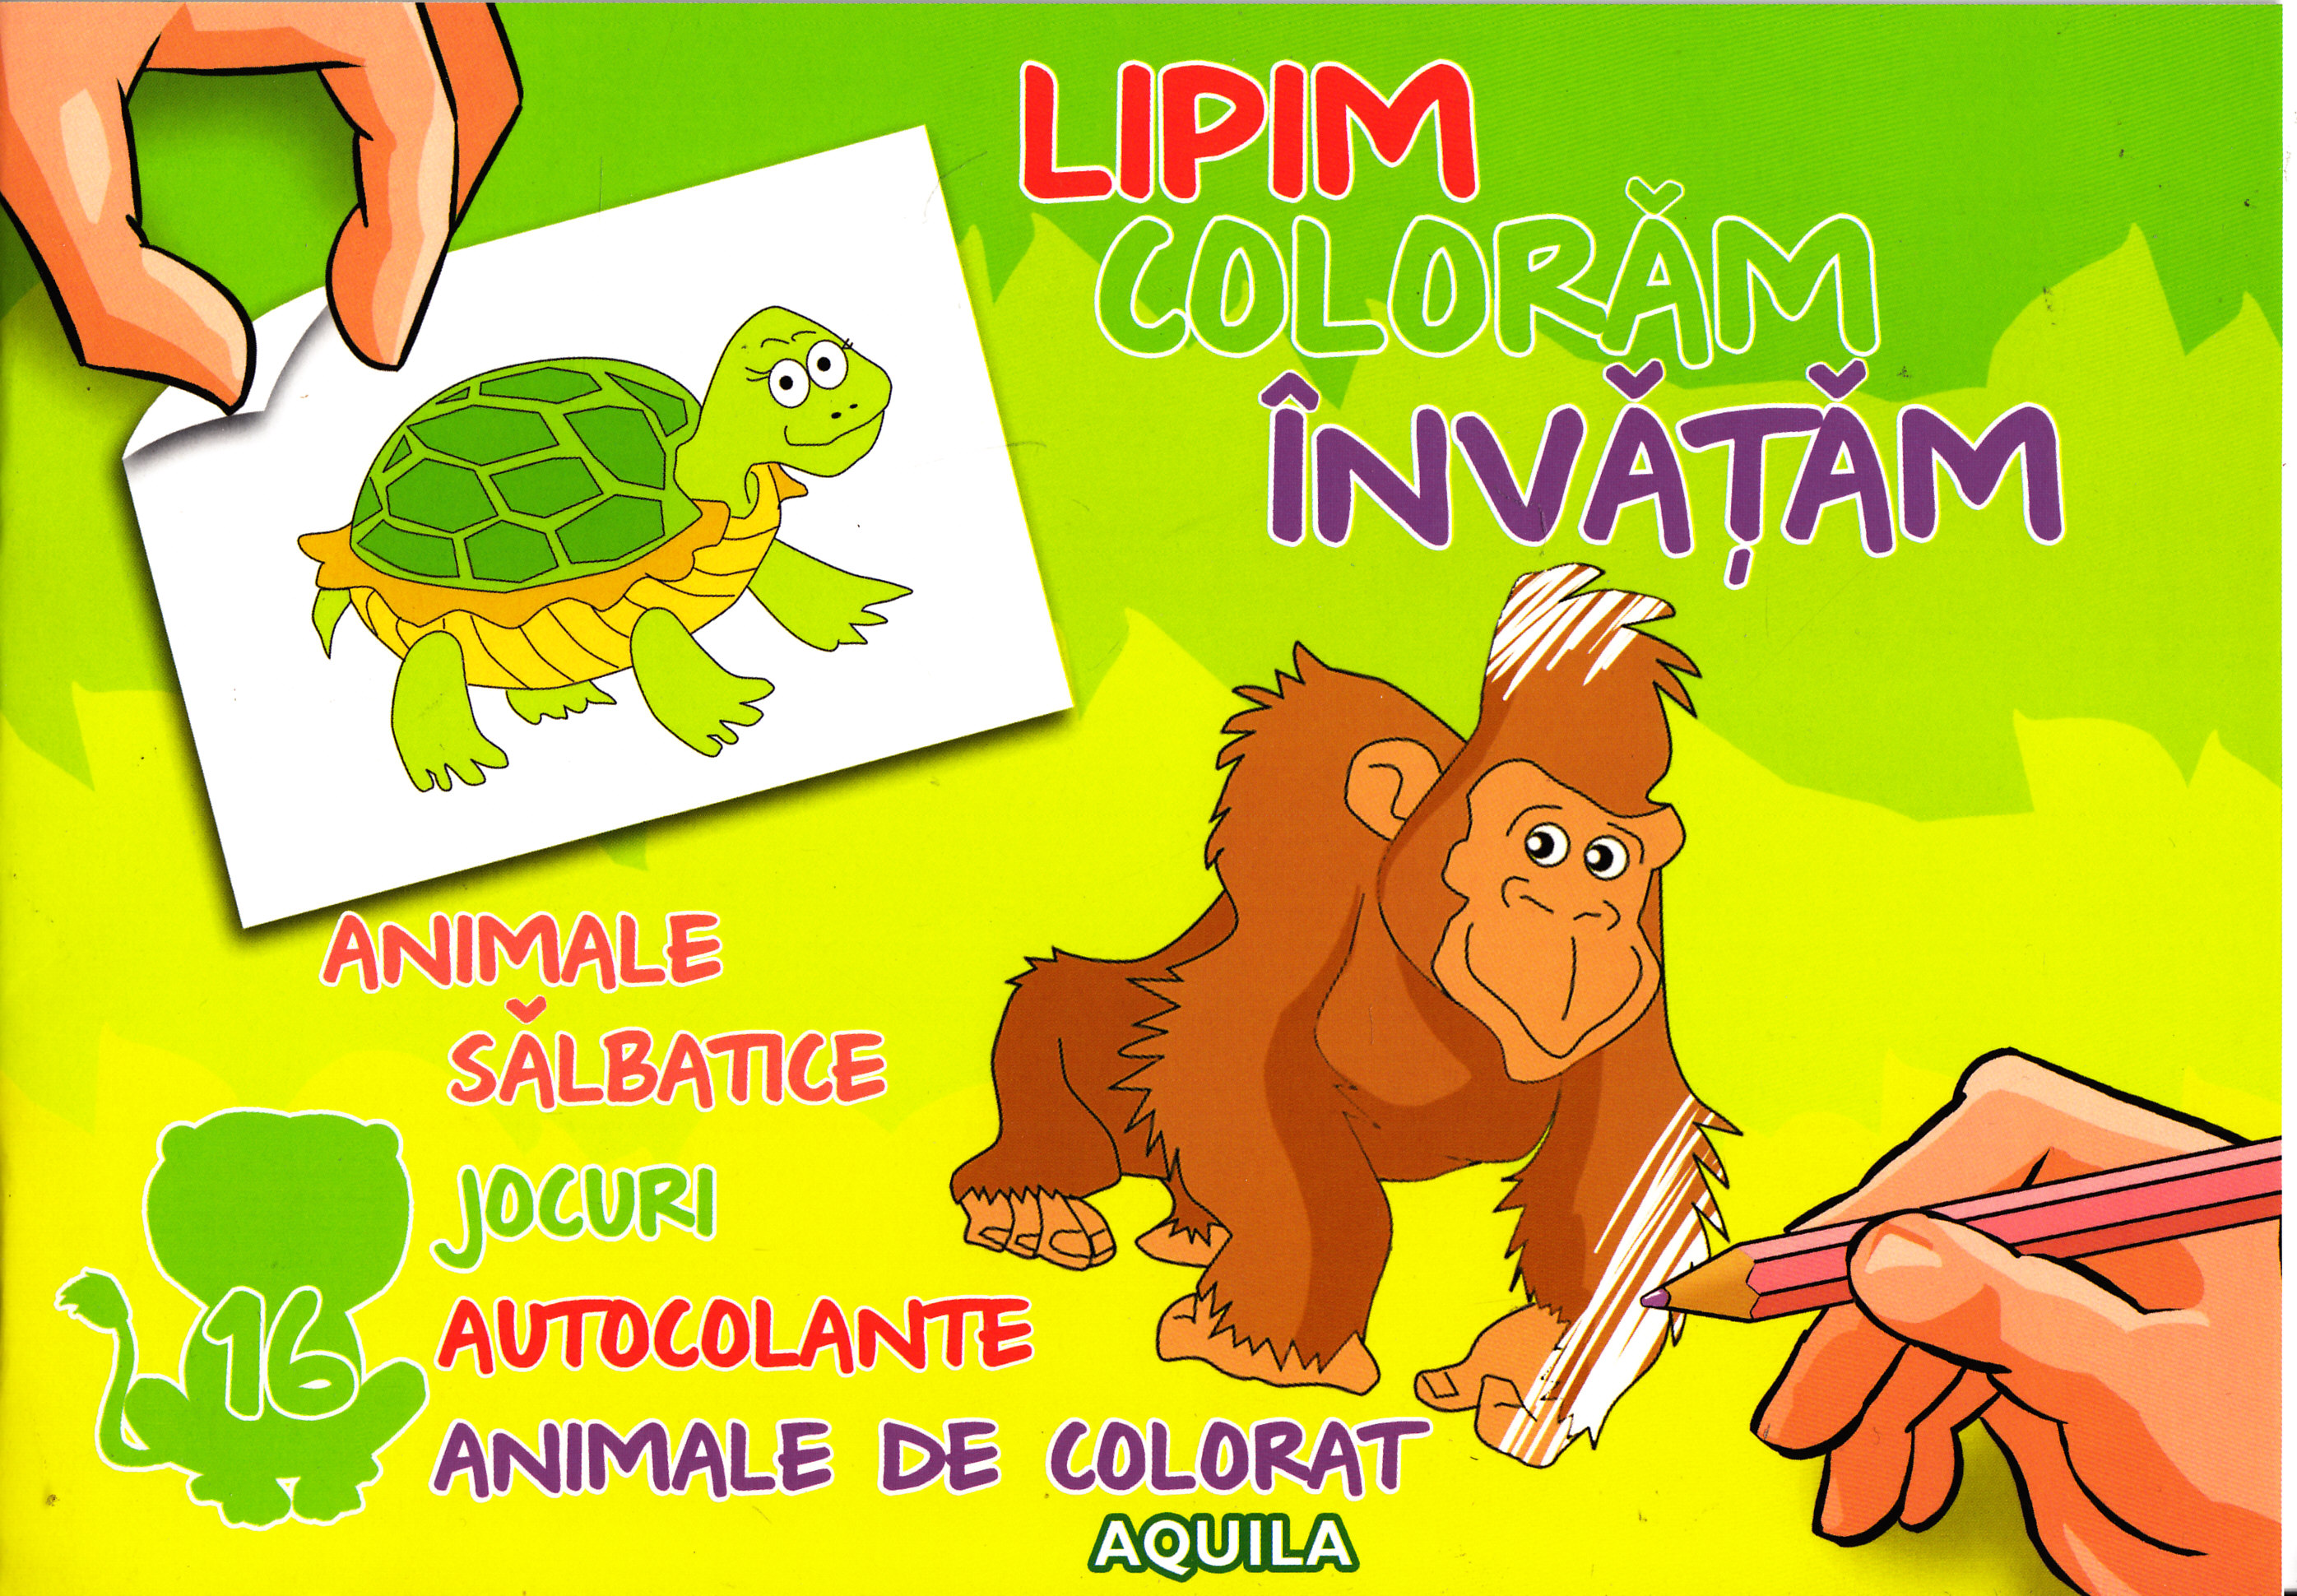 Lipim, coloram, invatam - Animale salbatice